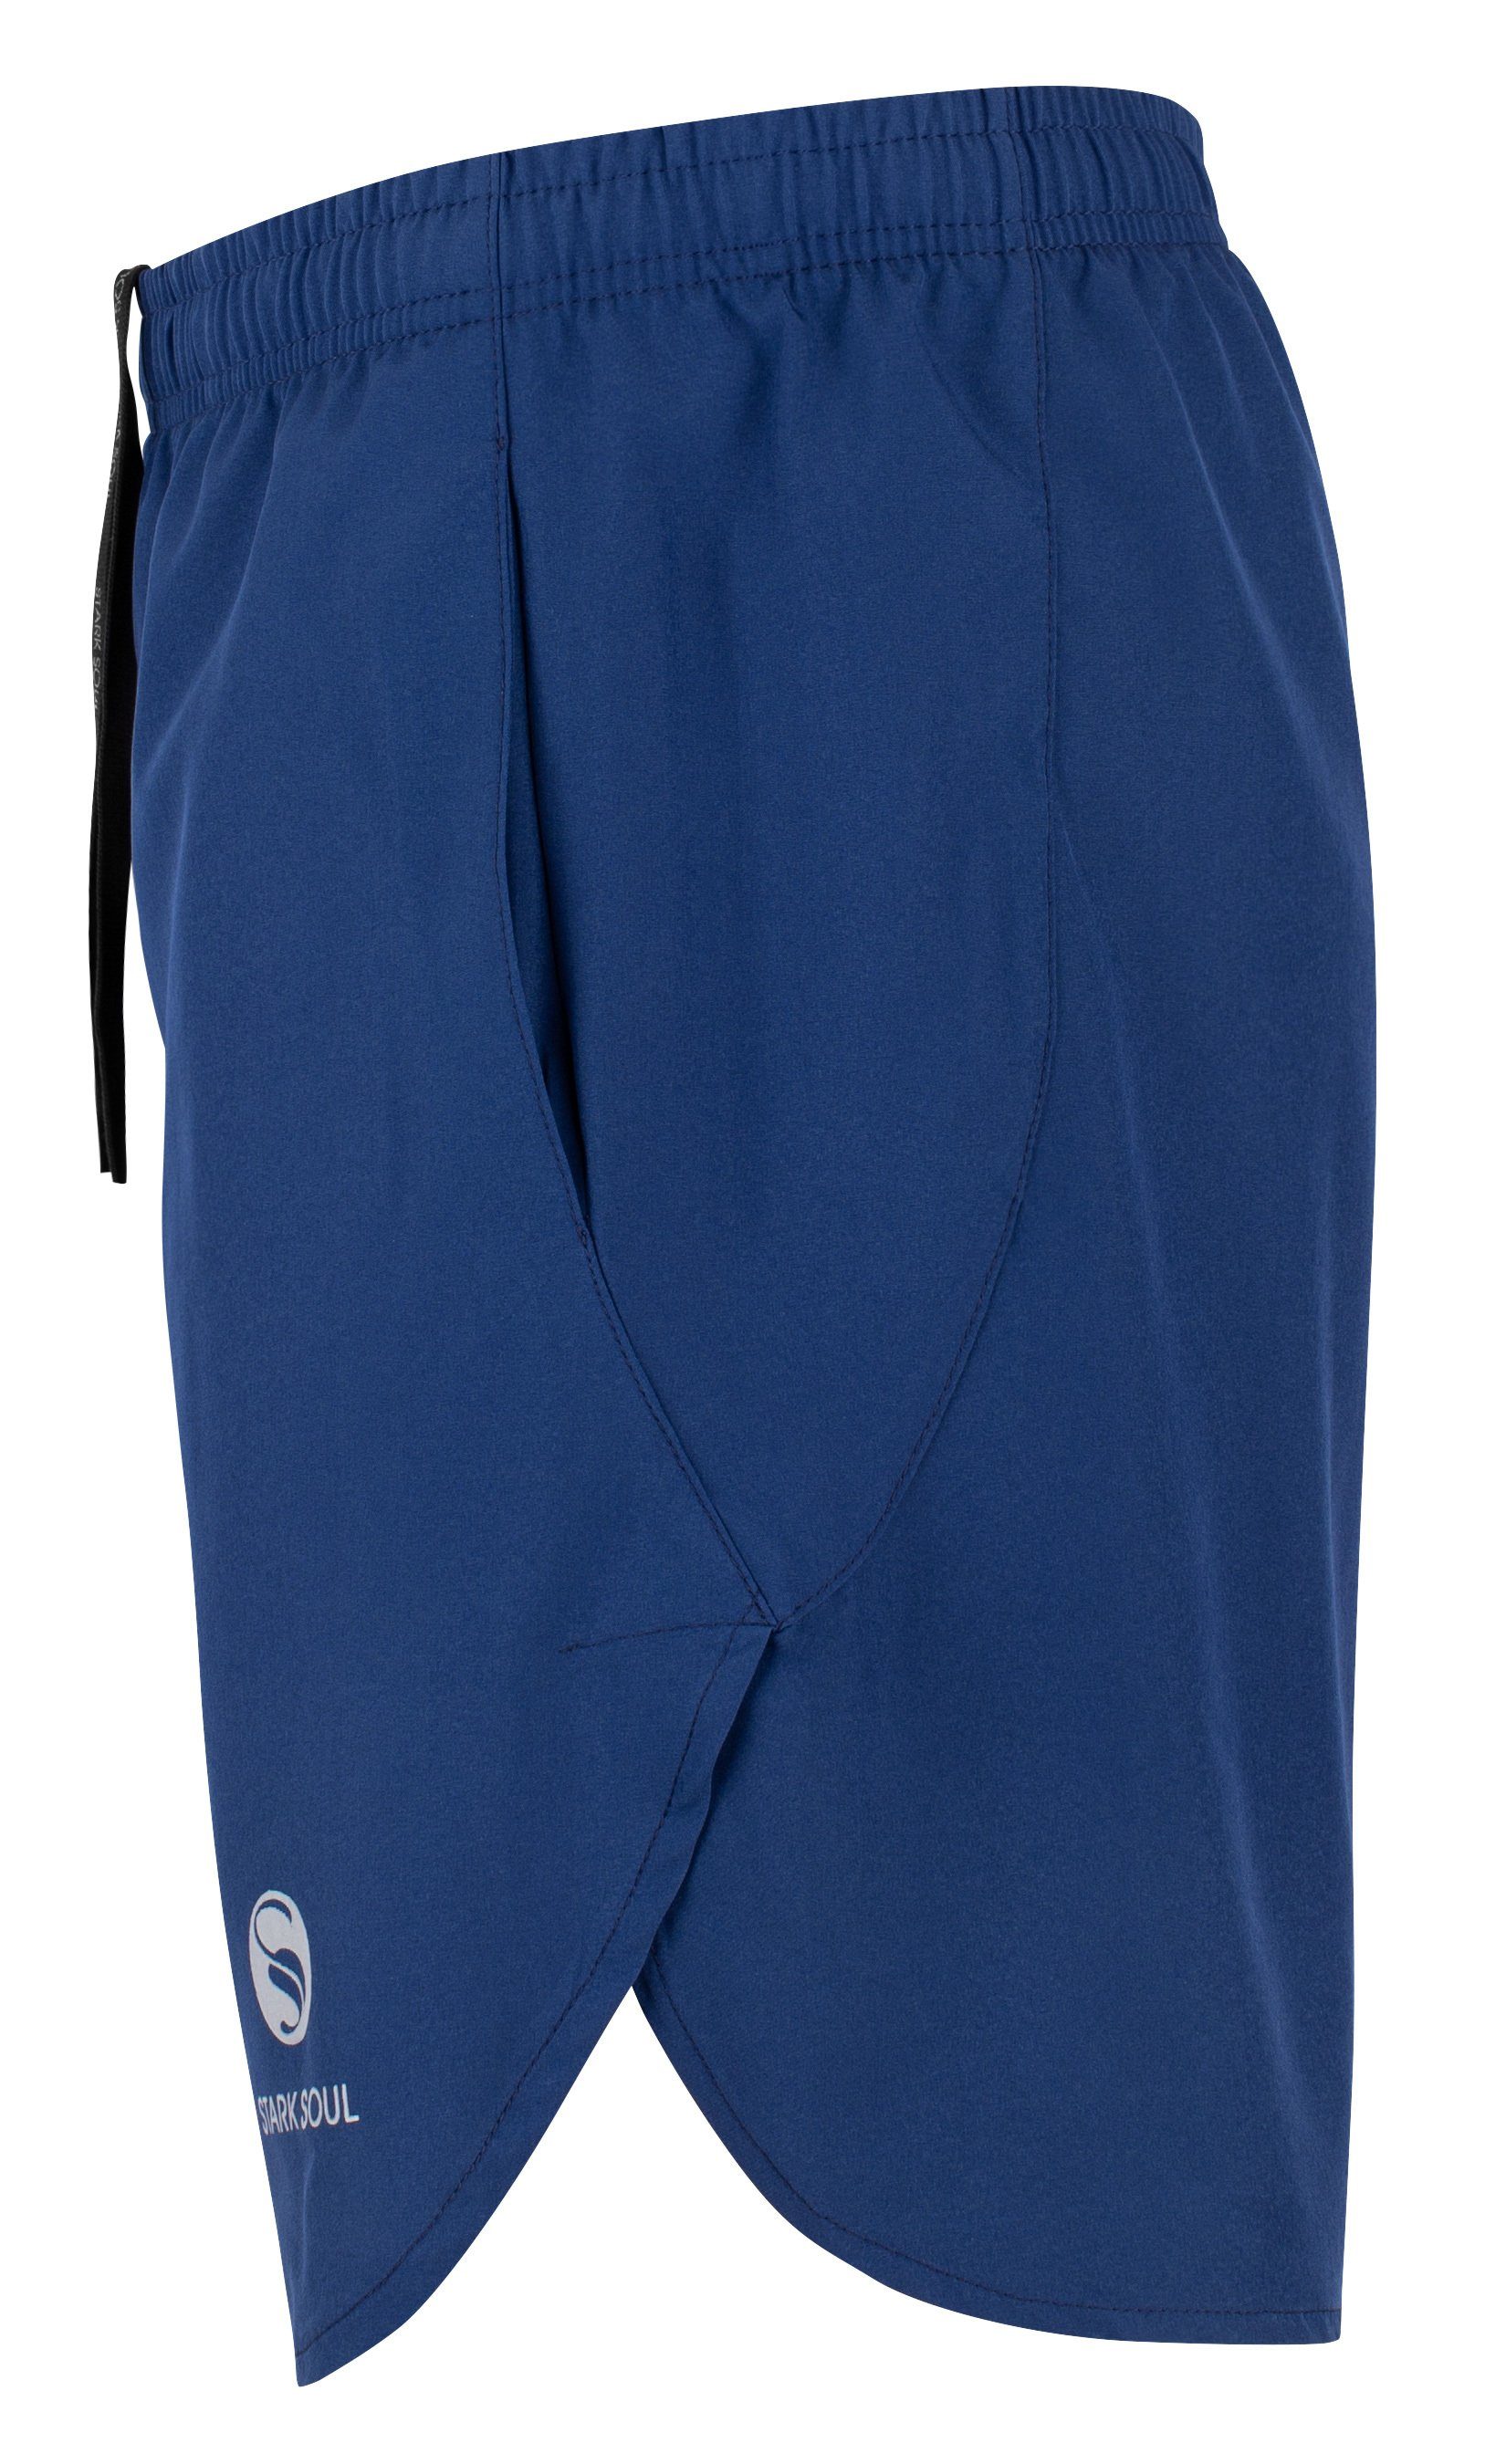 Stark Soul® Funktionshose kurze - Dry Sporthose Material Quick Marineblau Schnelltrocknend aus